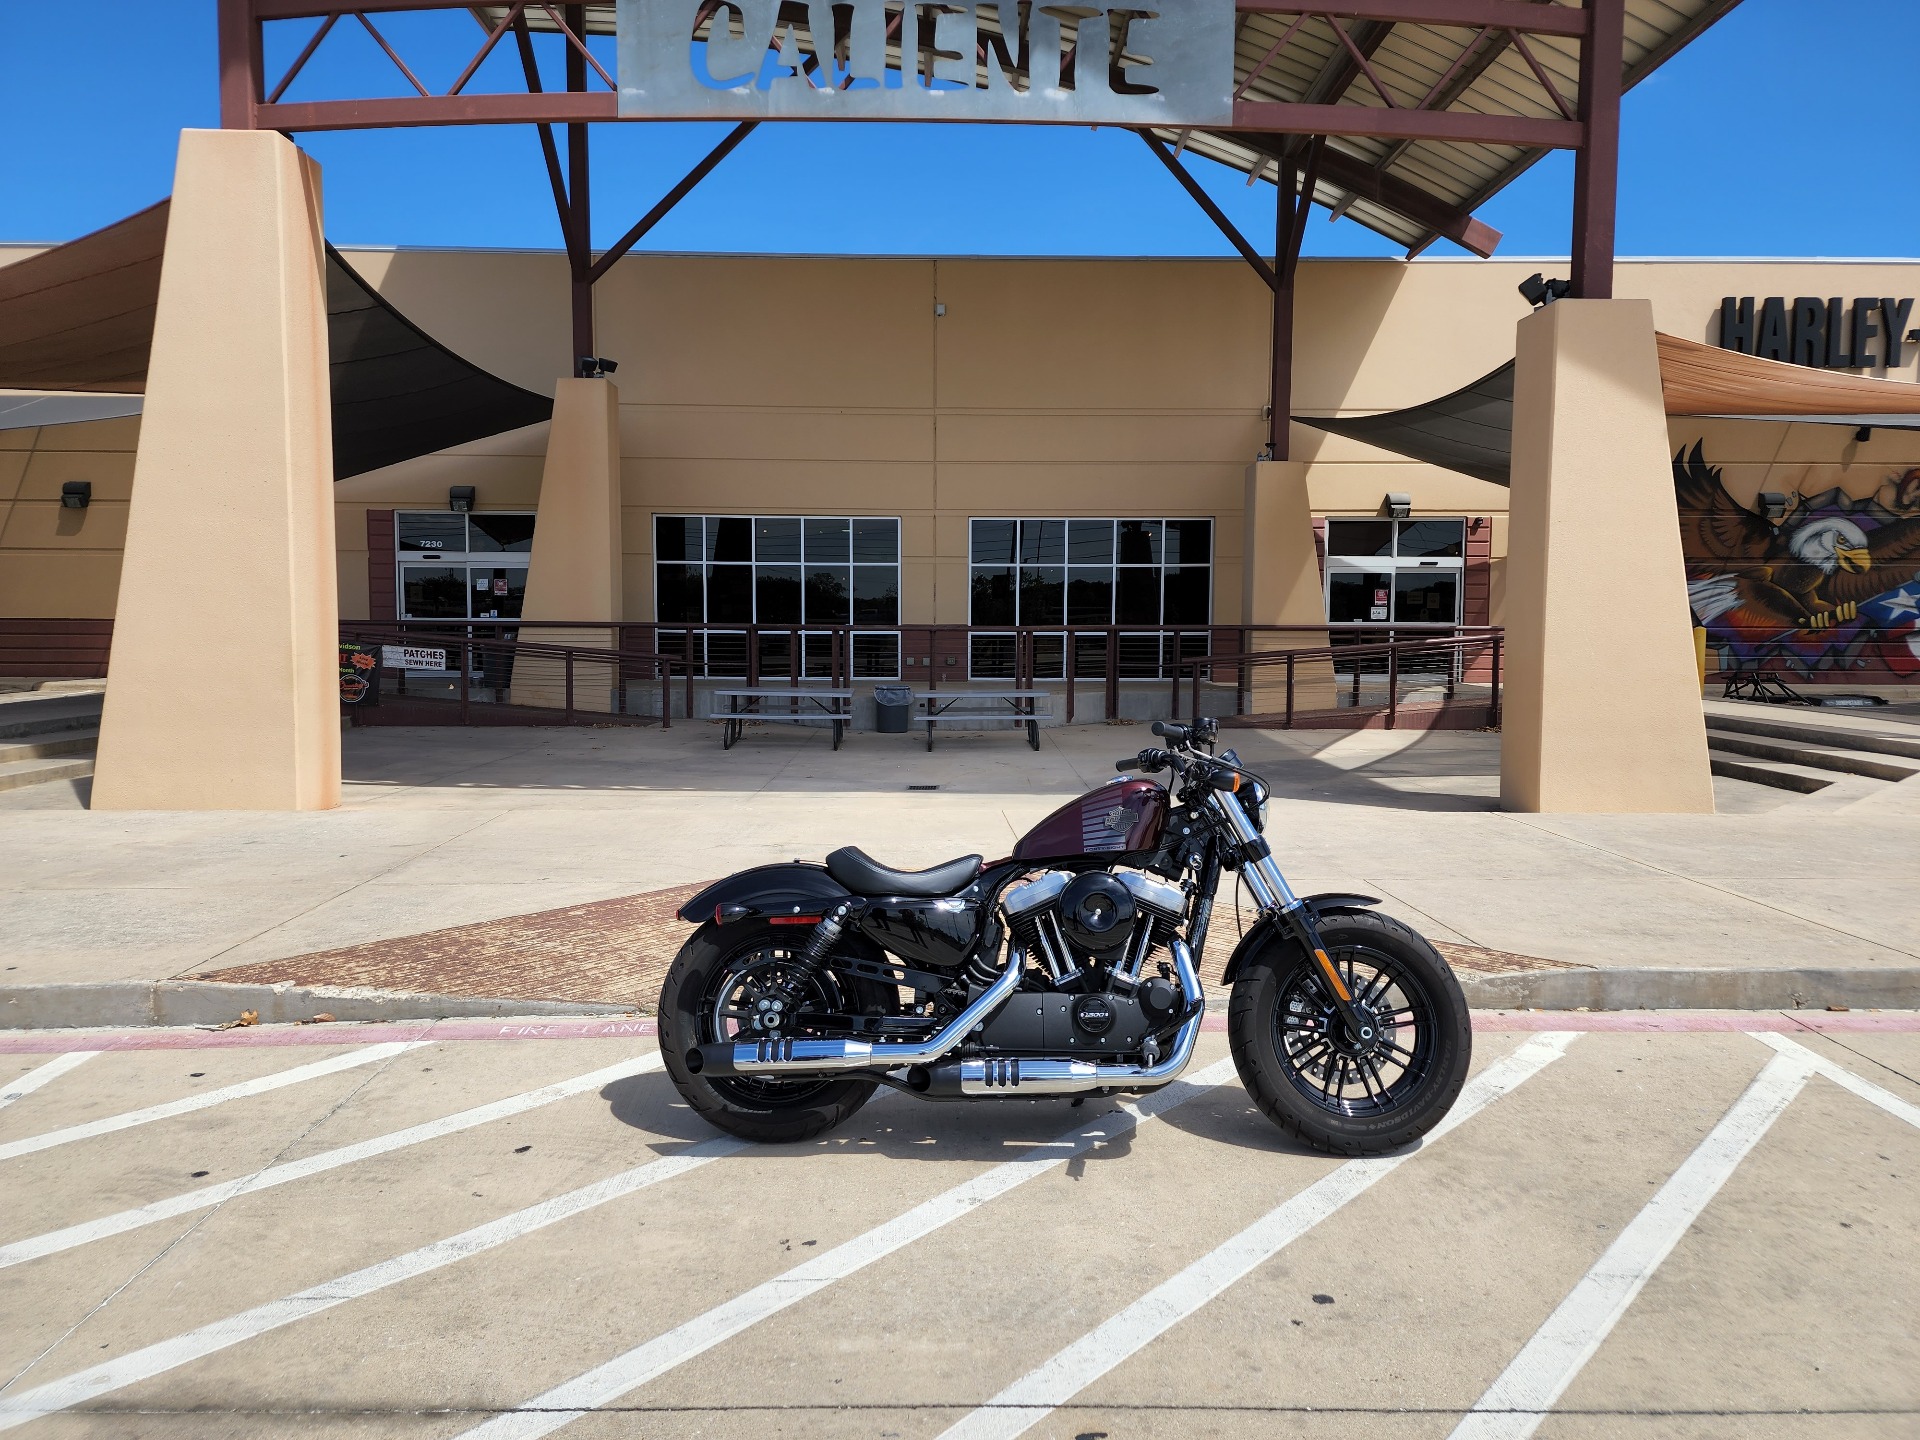 2018 Harley-Davidson Forty-Eight® in San Antonio, Texas - Photo 1